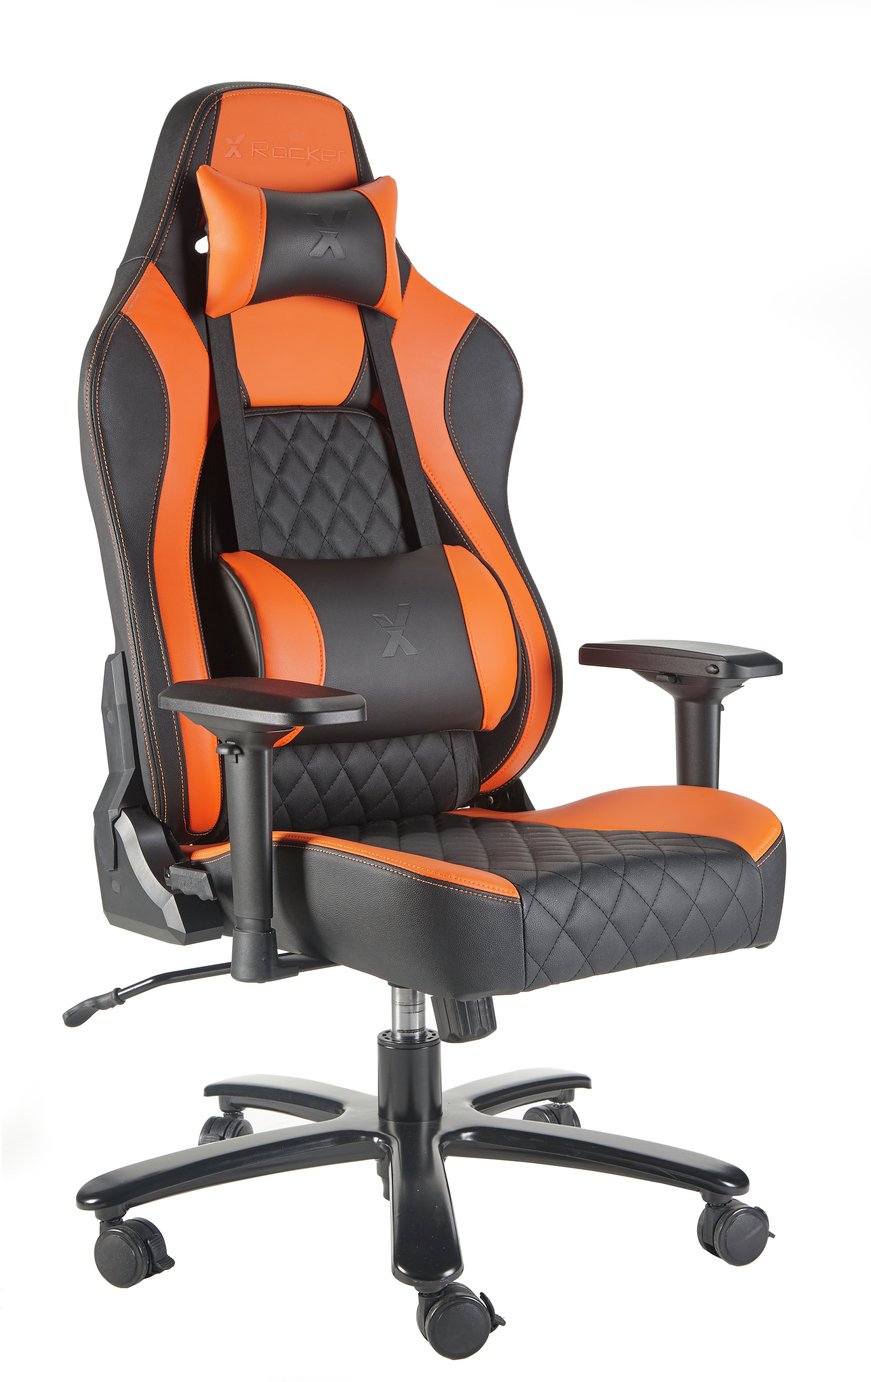 X Rocker Delta Pro Series IV Gaming Chair - Orange